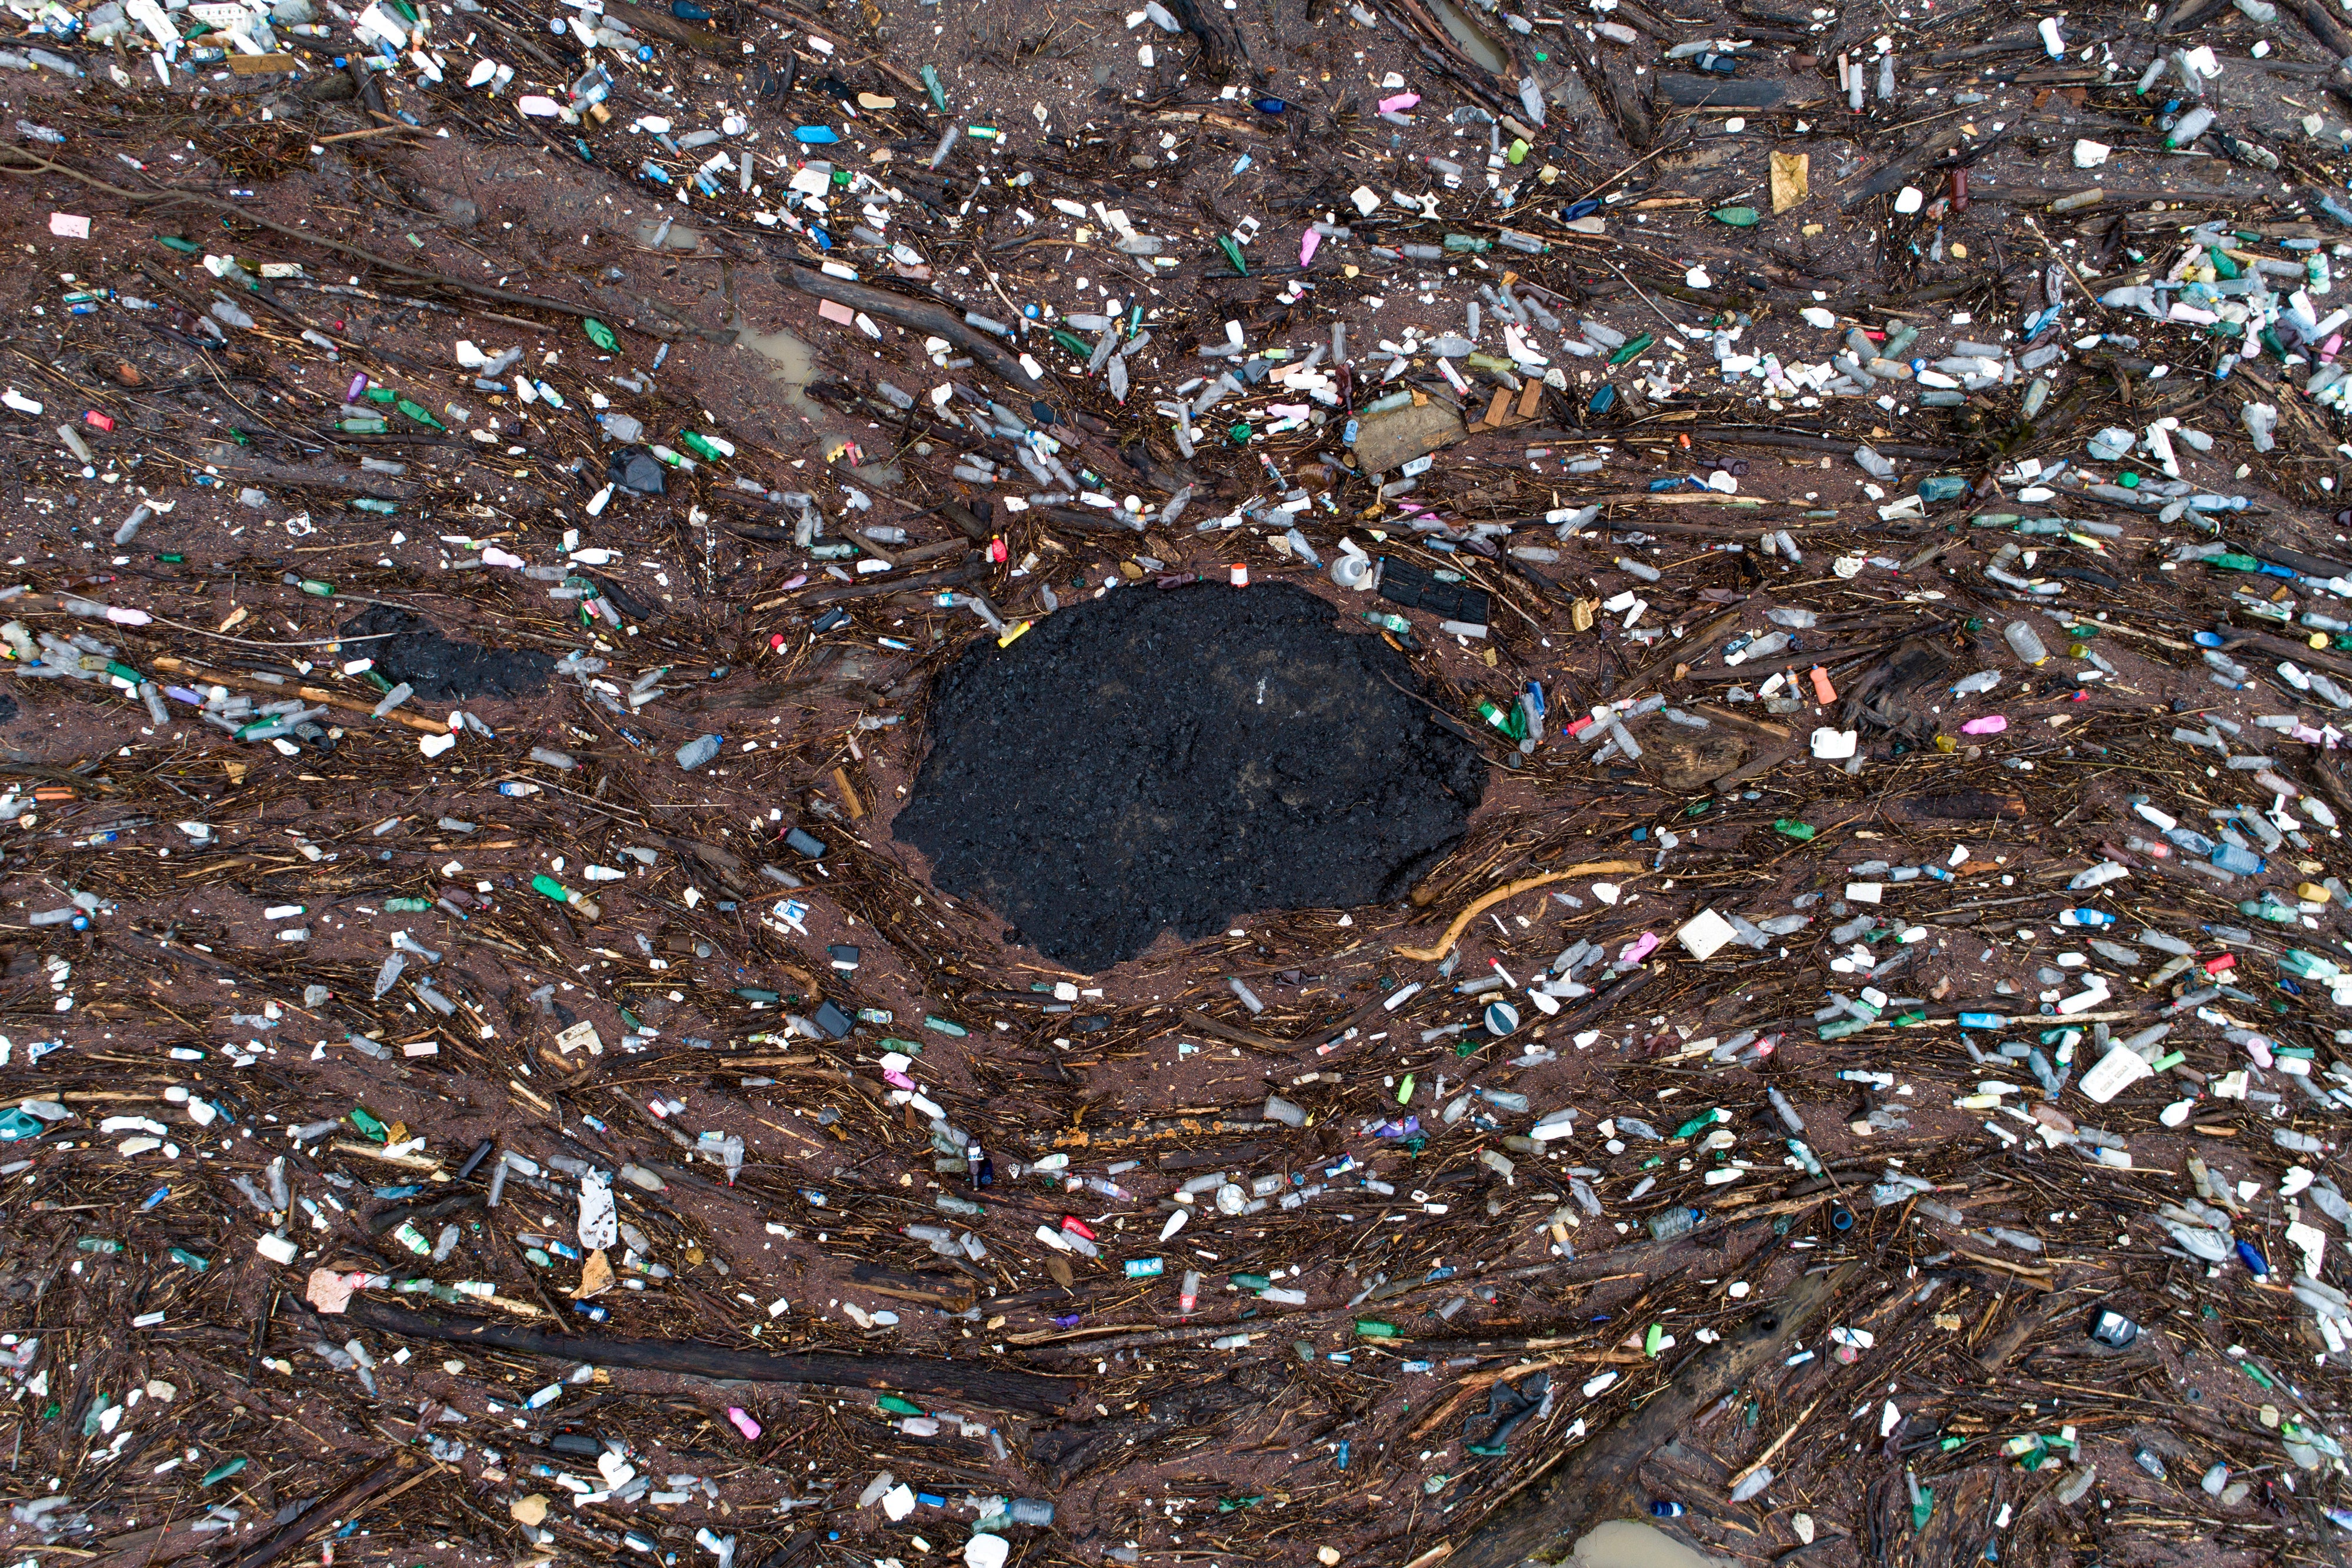 Swirls of plastic pollution amidst driftwood. (Photo: Armin Durgut, AP)